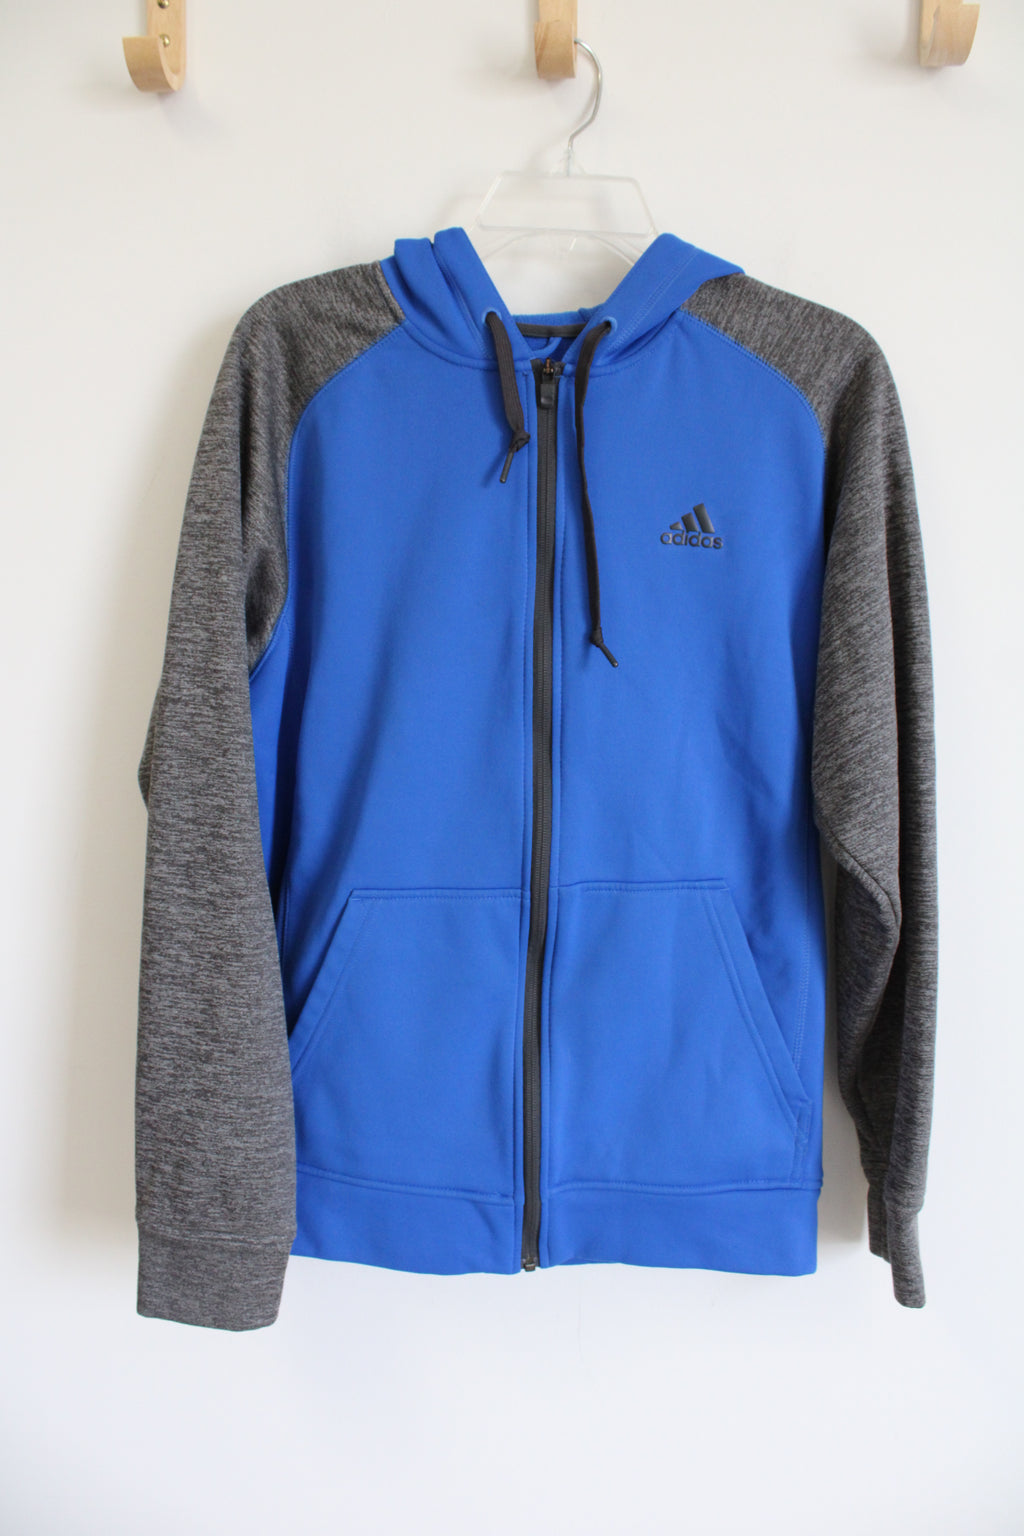 Adidas Gray Blue Zip Up Hoodie Jacket | Youth M (10/12)